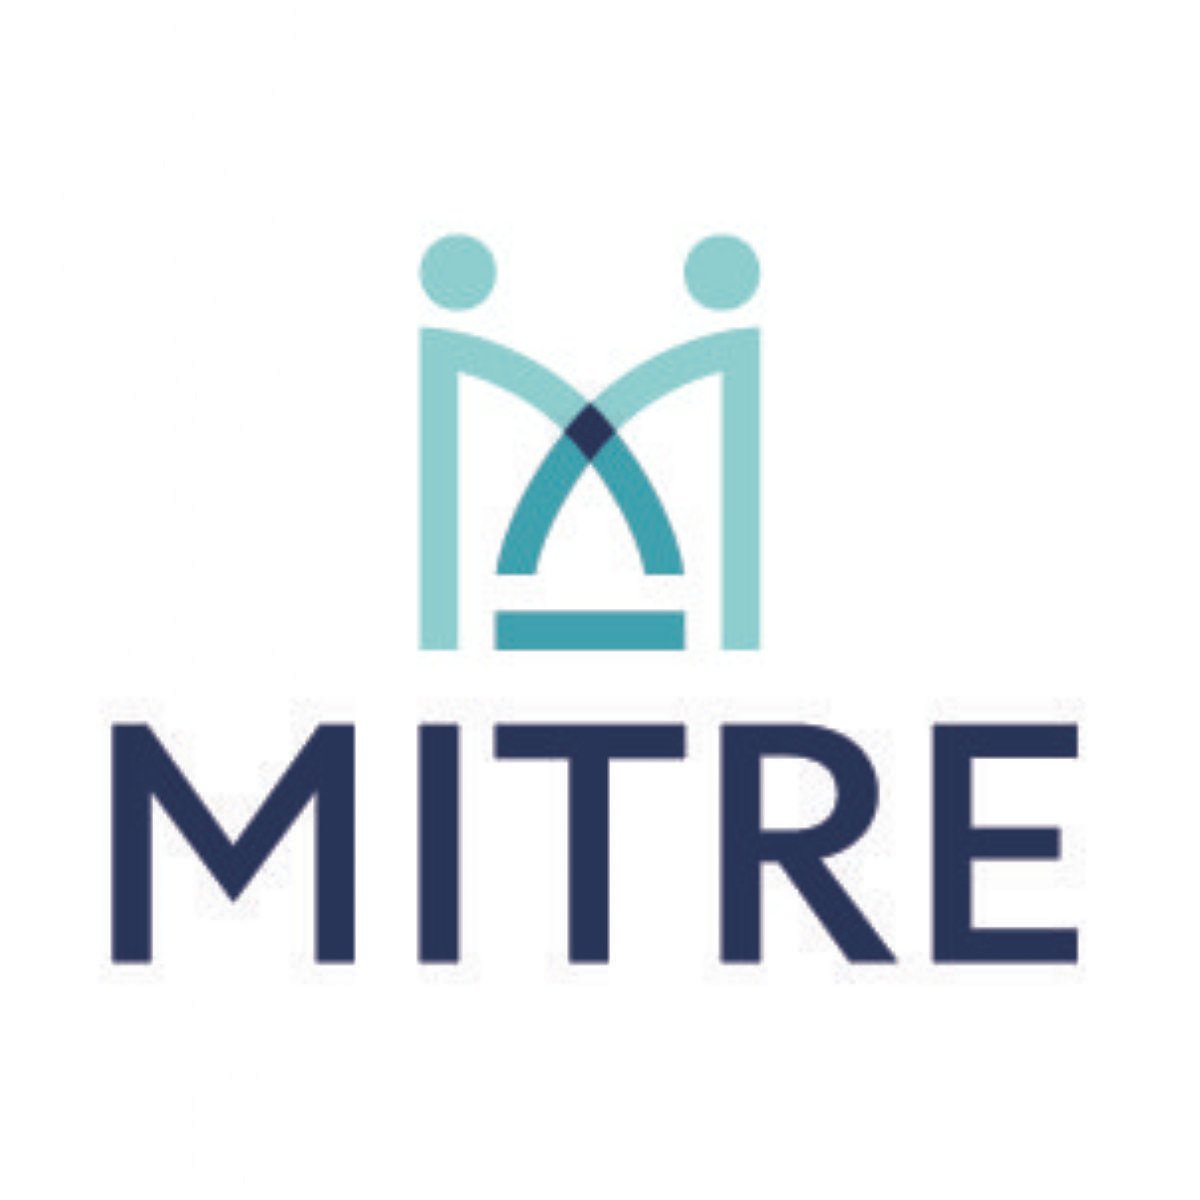 Mitre Logo - The Minster School School Academy Conversion